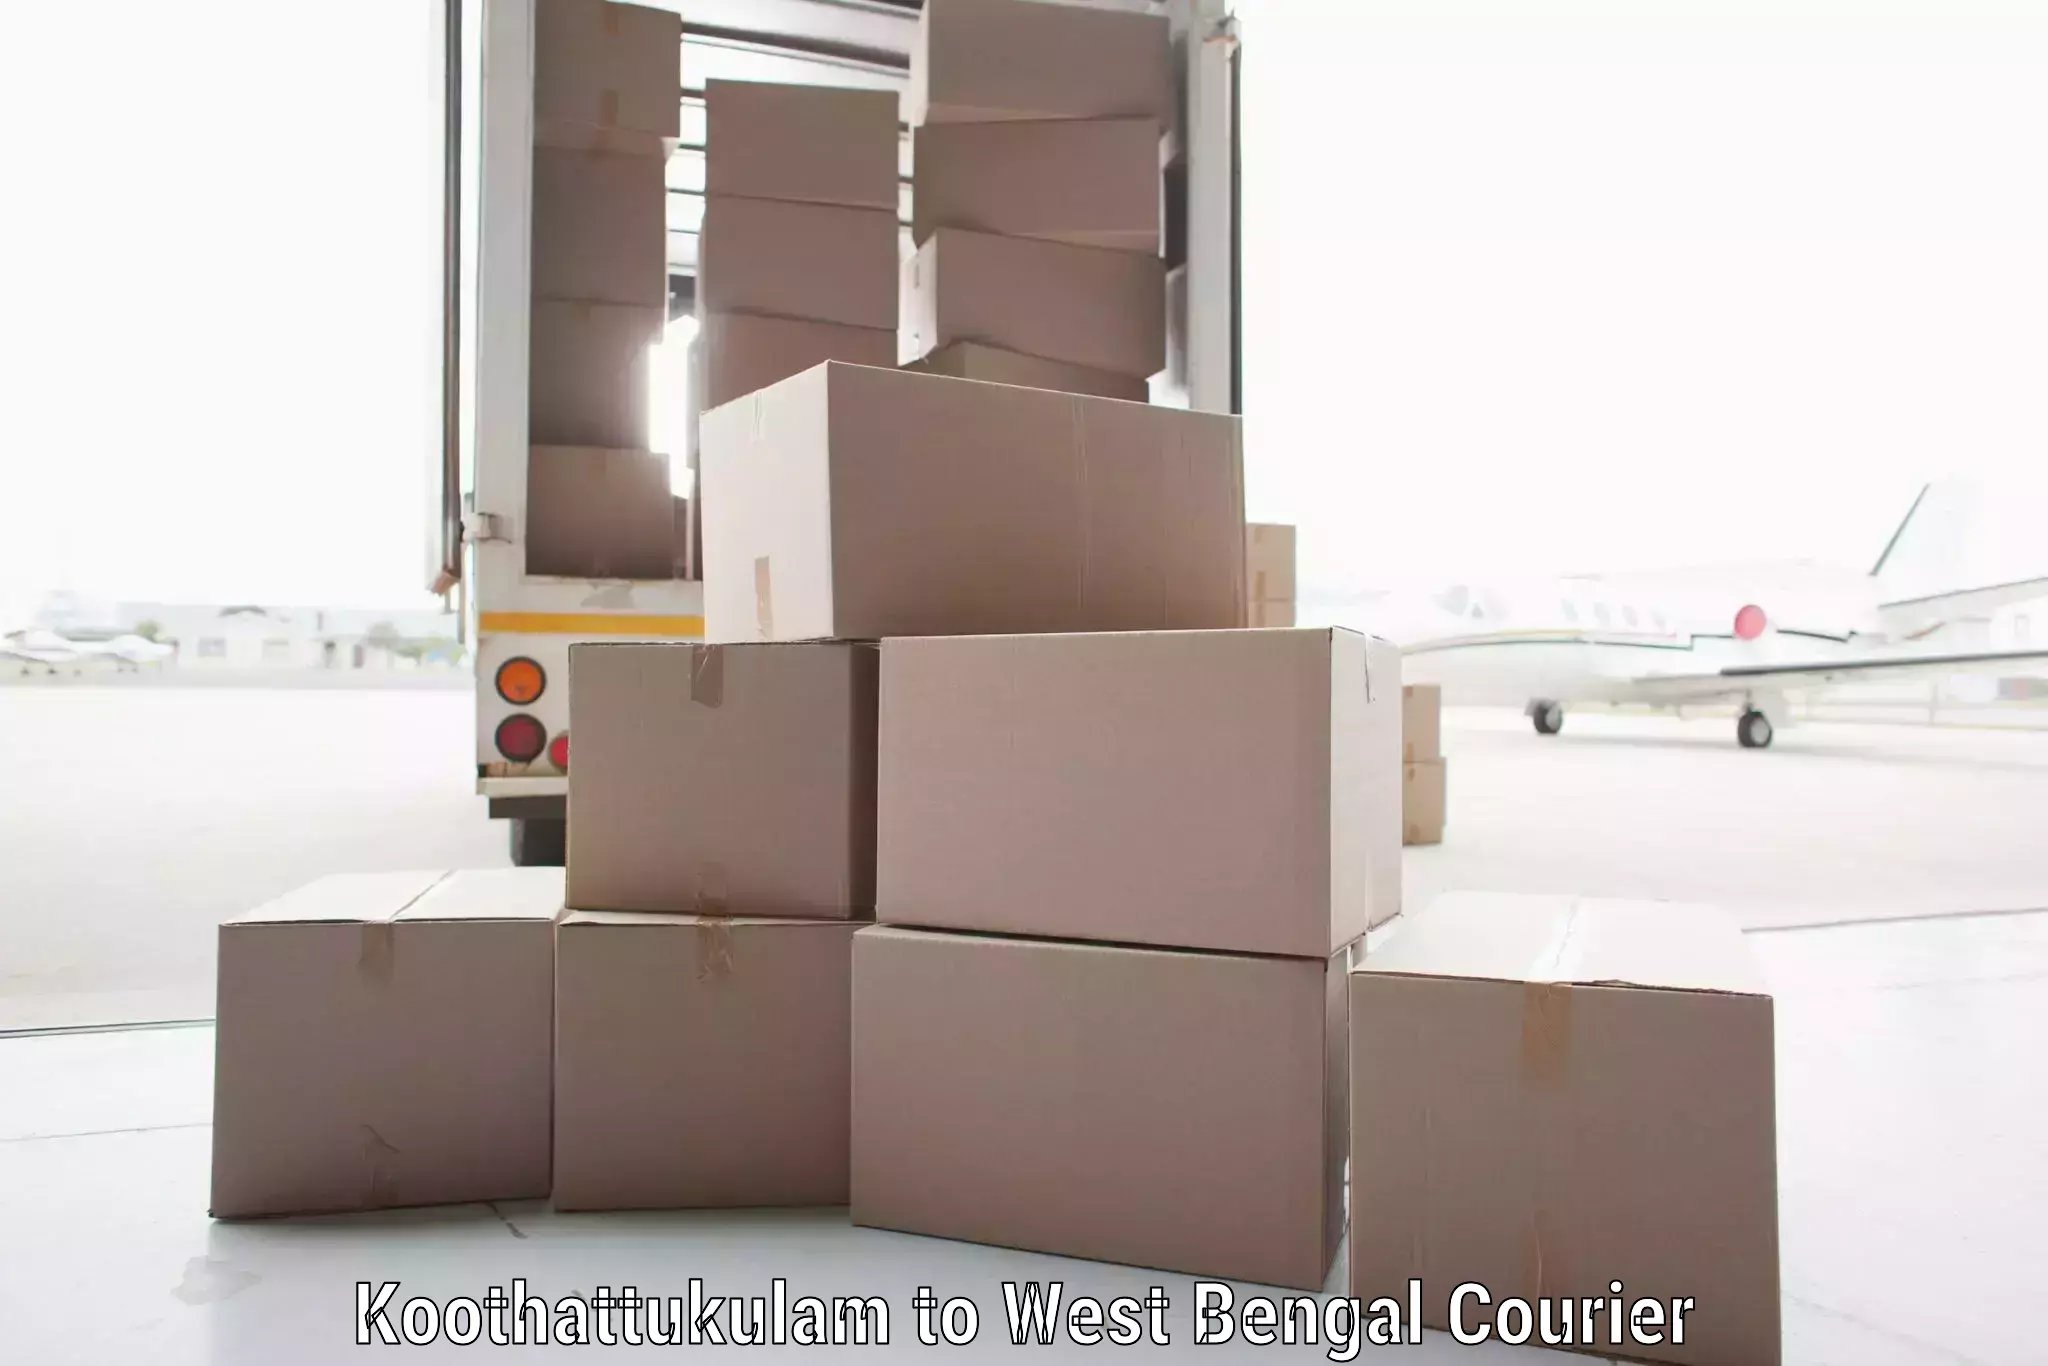 Courier service partnerships Koothattukulam to Kolkata Port